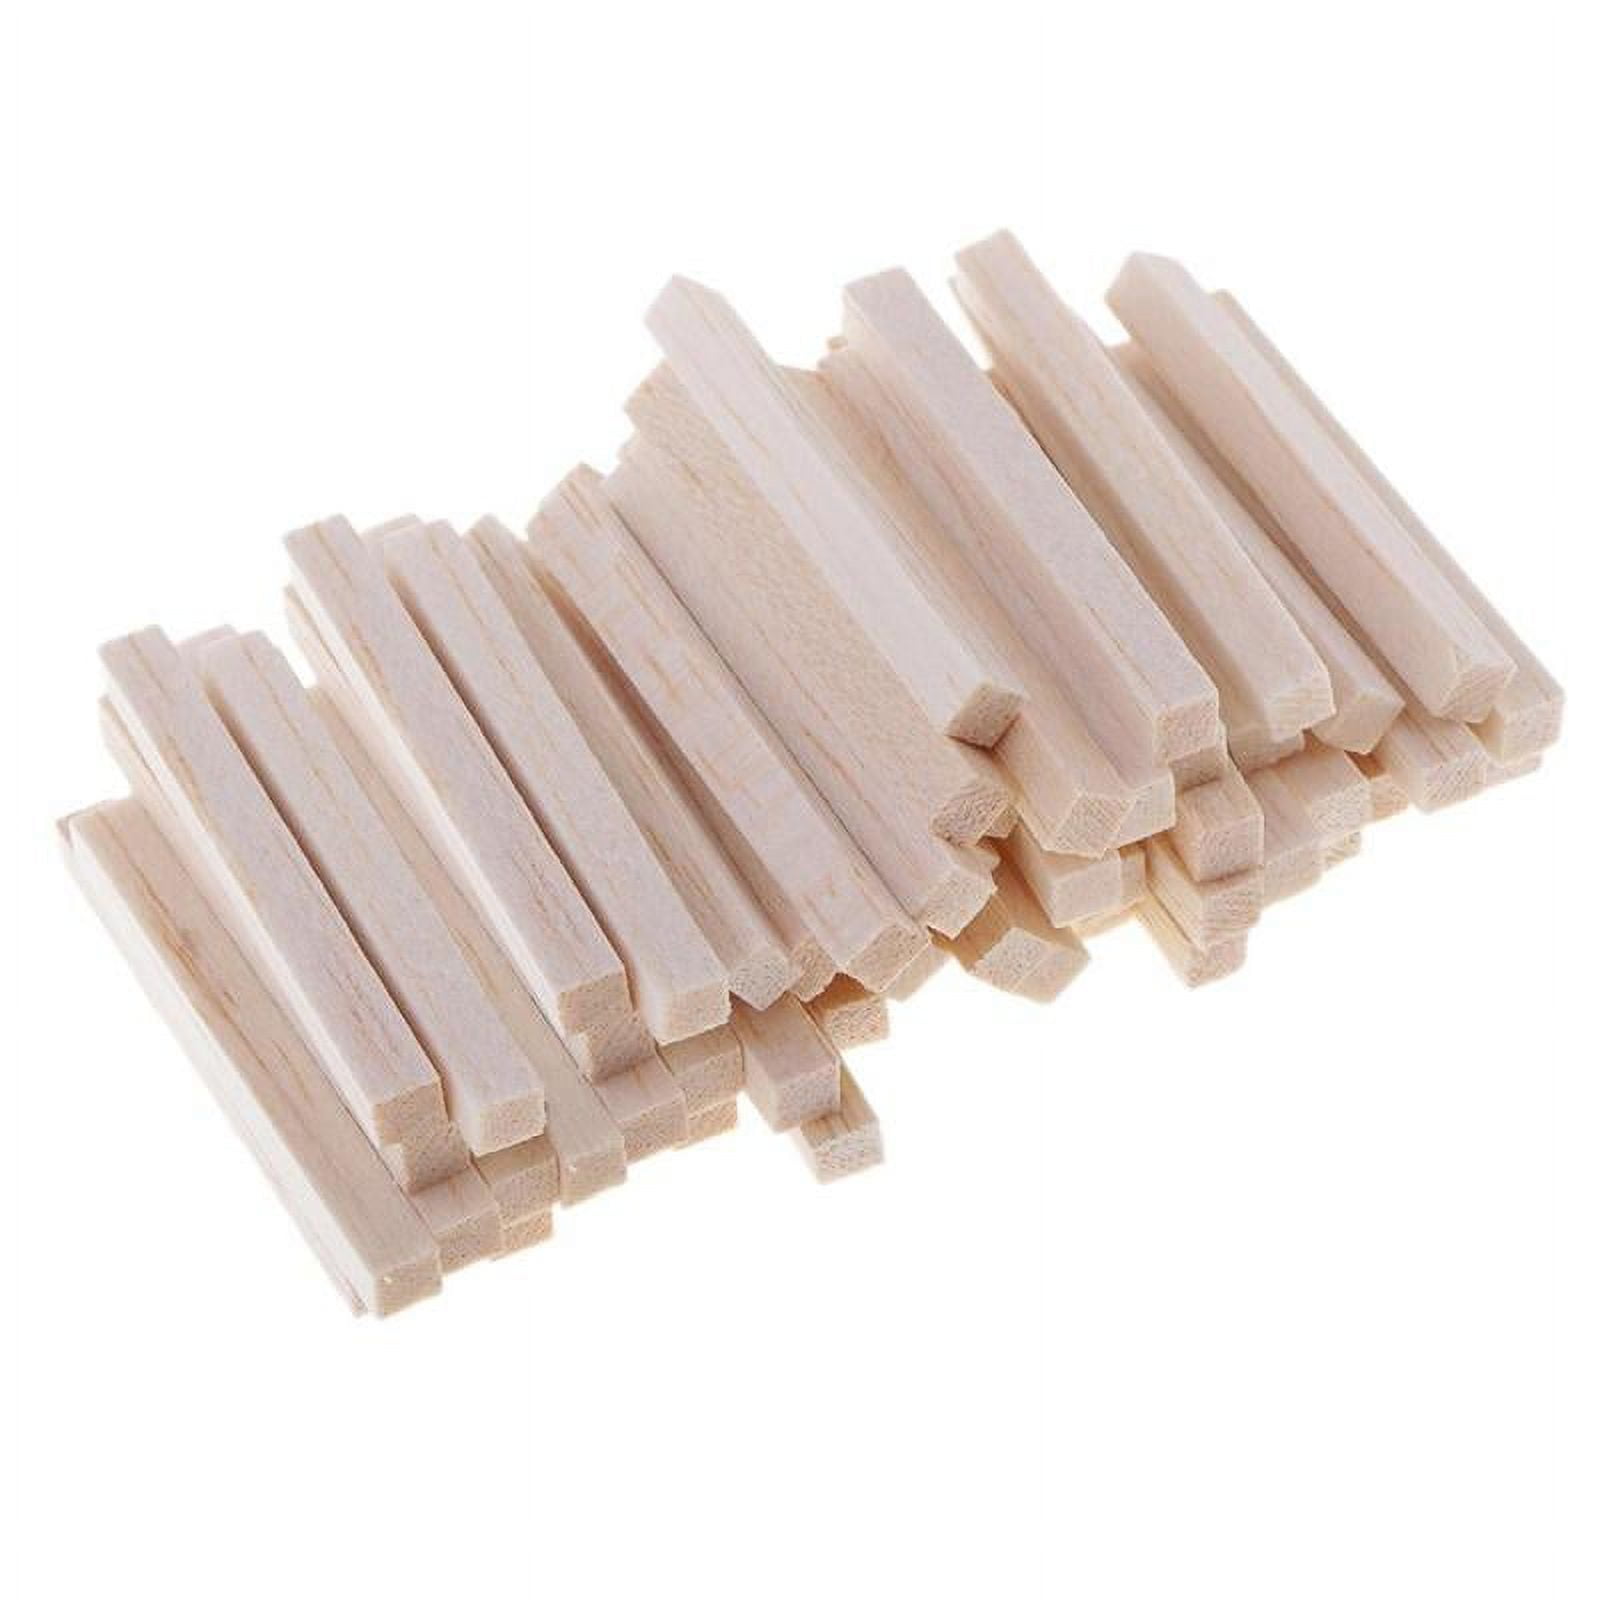 50x Wood Log Sticks For Diy Crafts Photo Props Craft Sticks, Wood